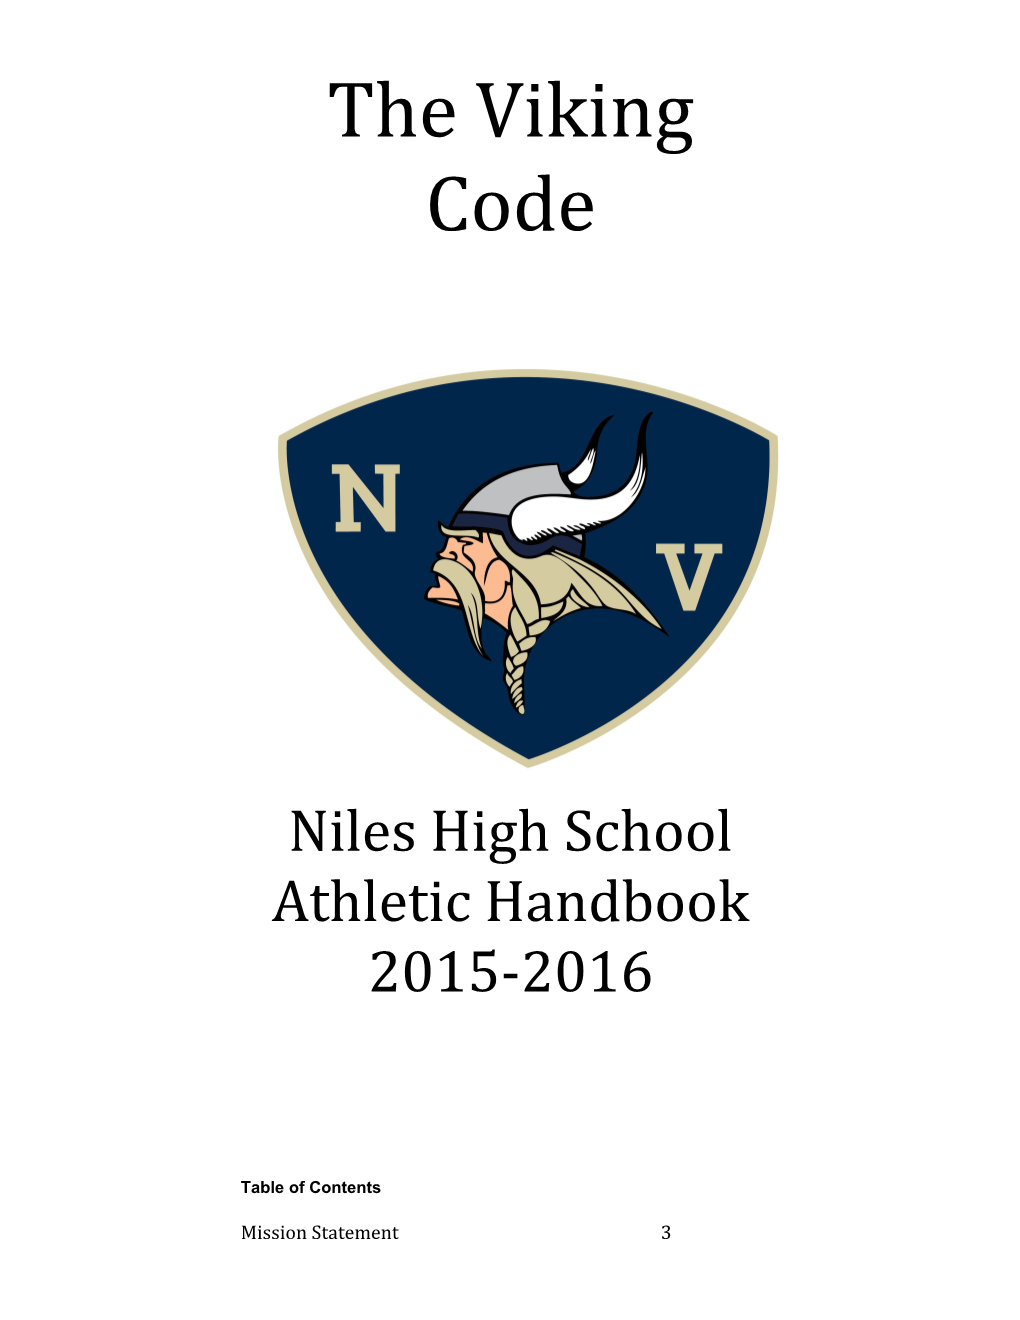 Niles High School Athletic Handbook